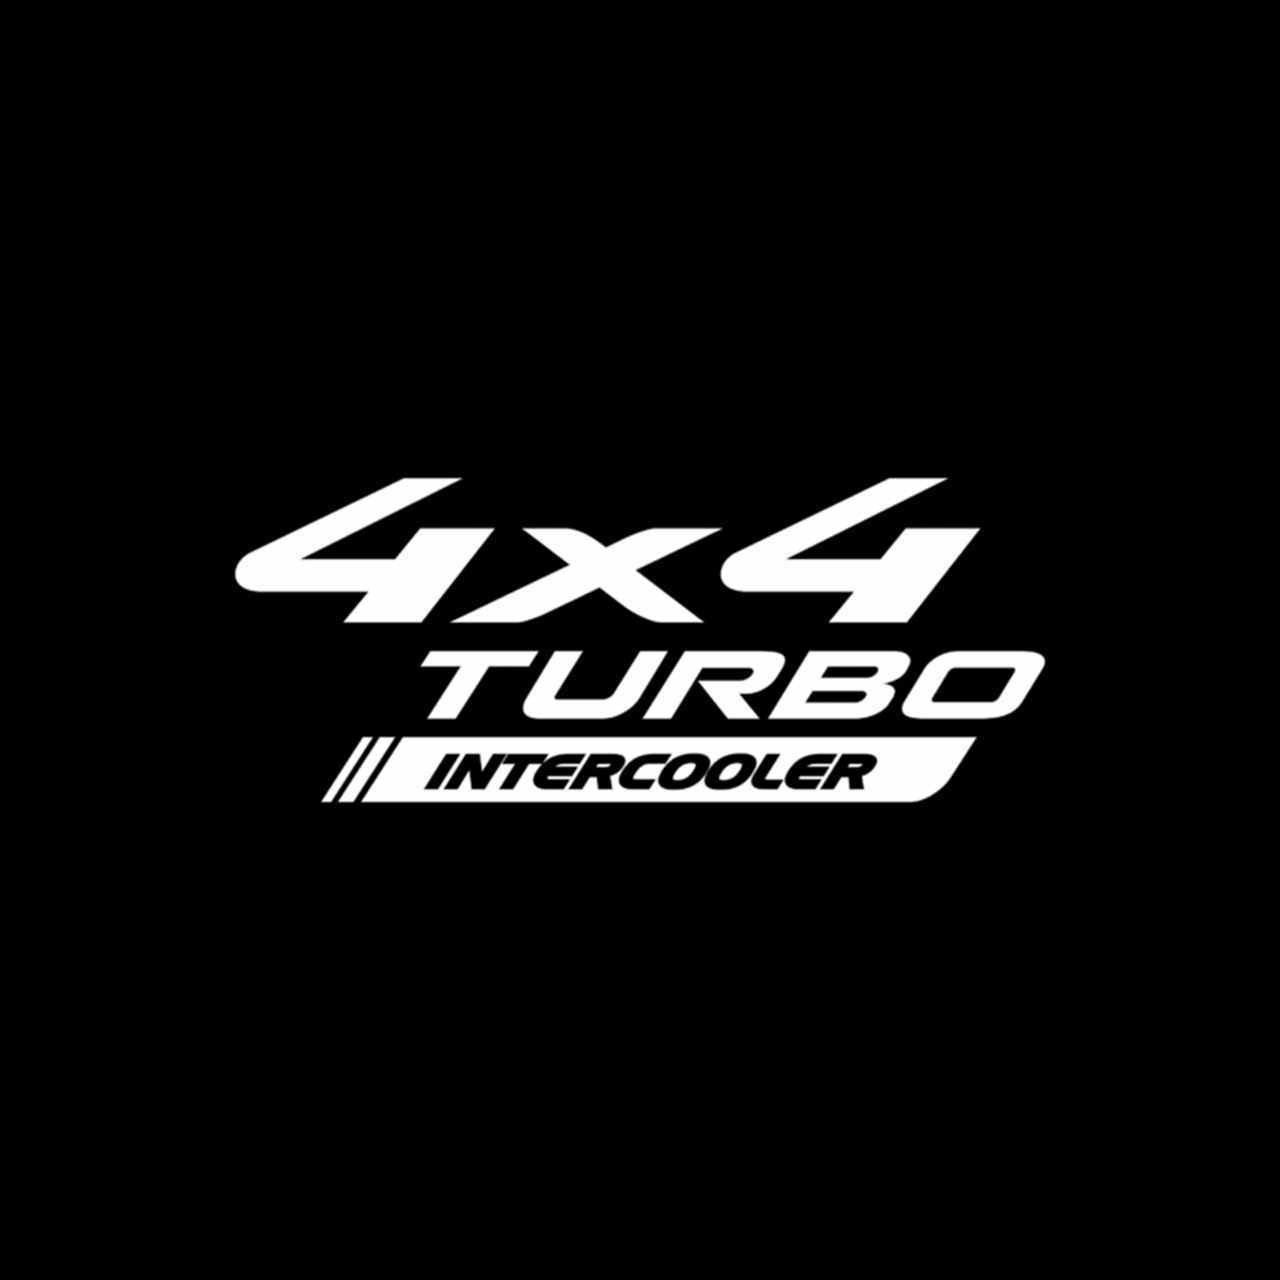 Autocollant 4x4 Turbo Intercooler - Taille au choix